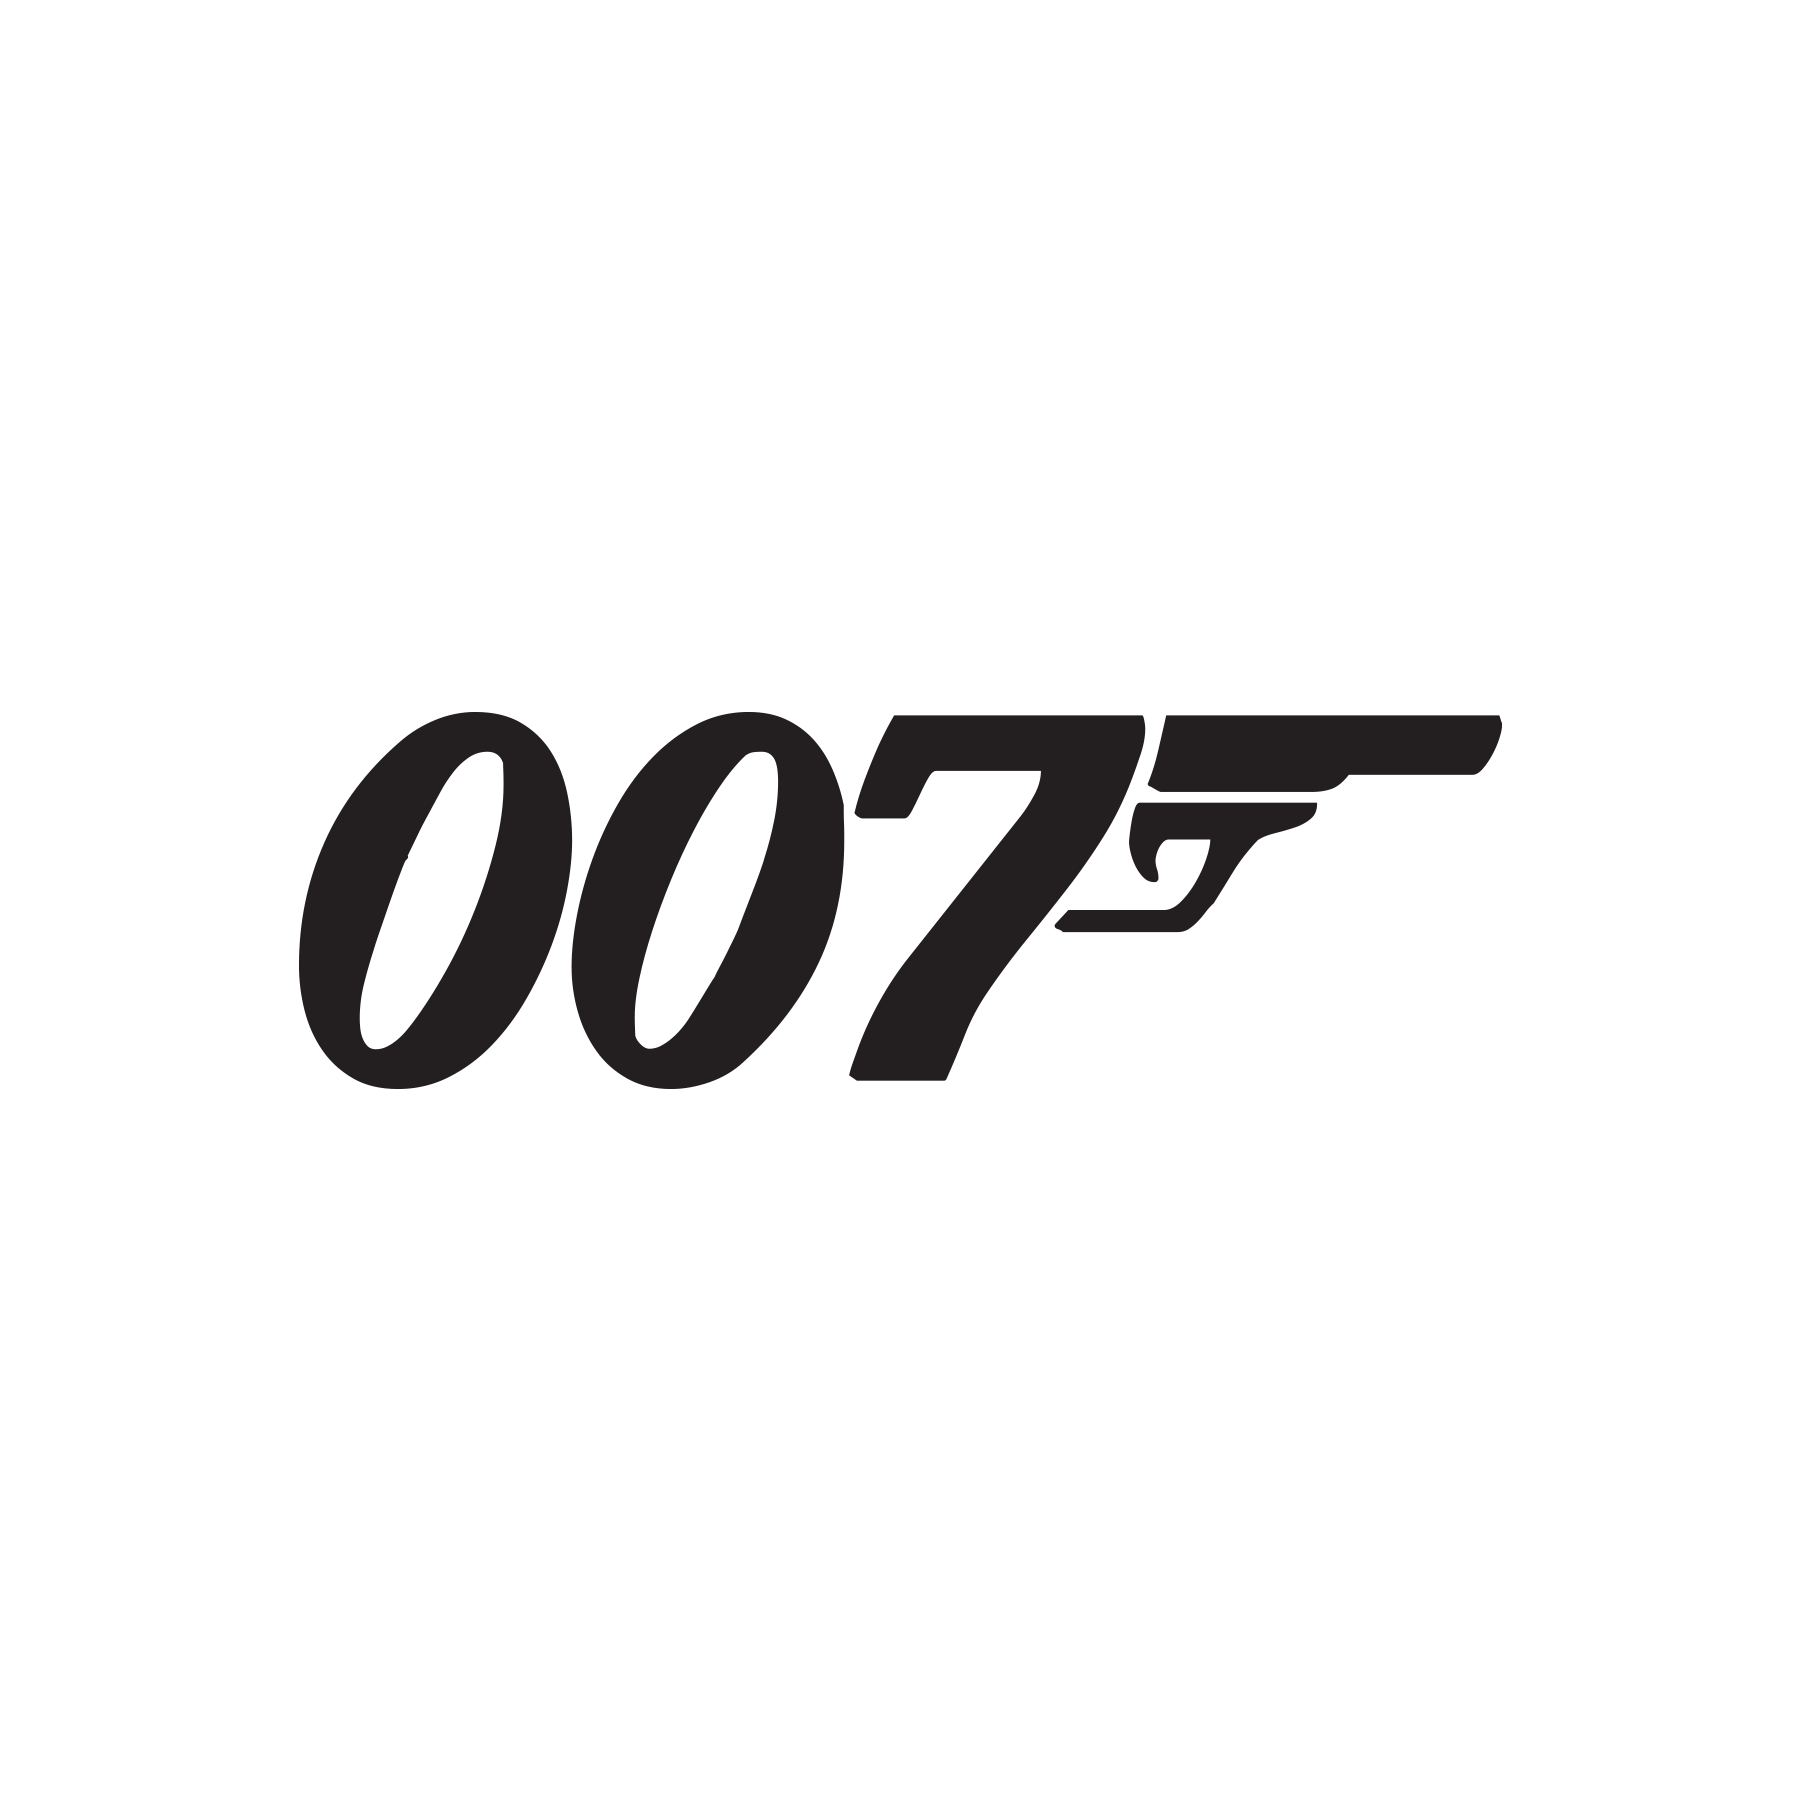 James Bond 007 –